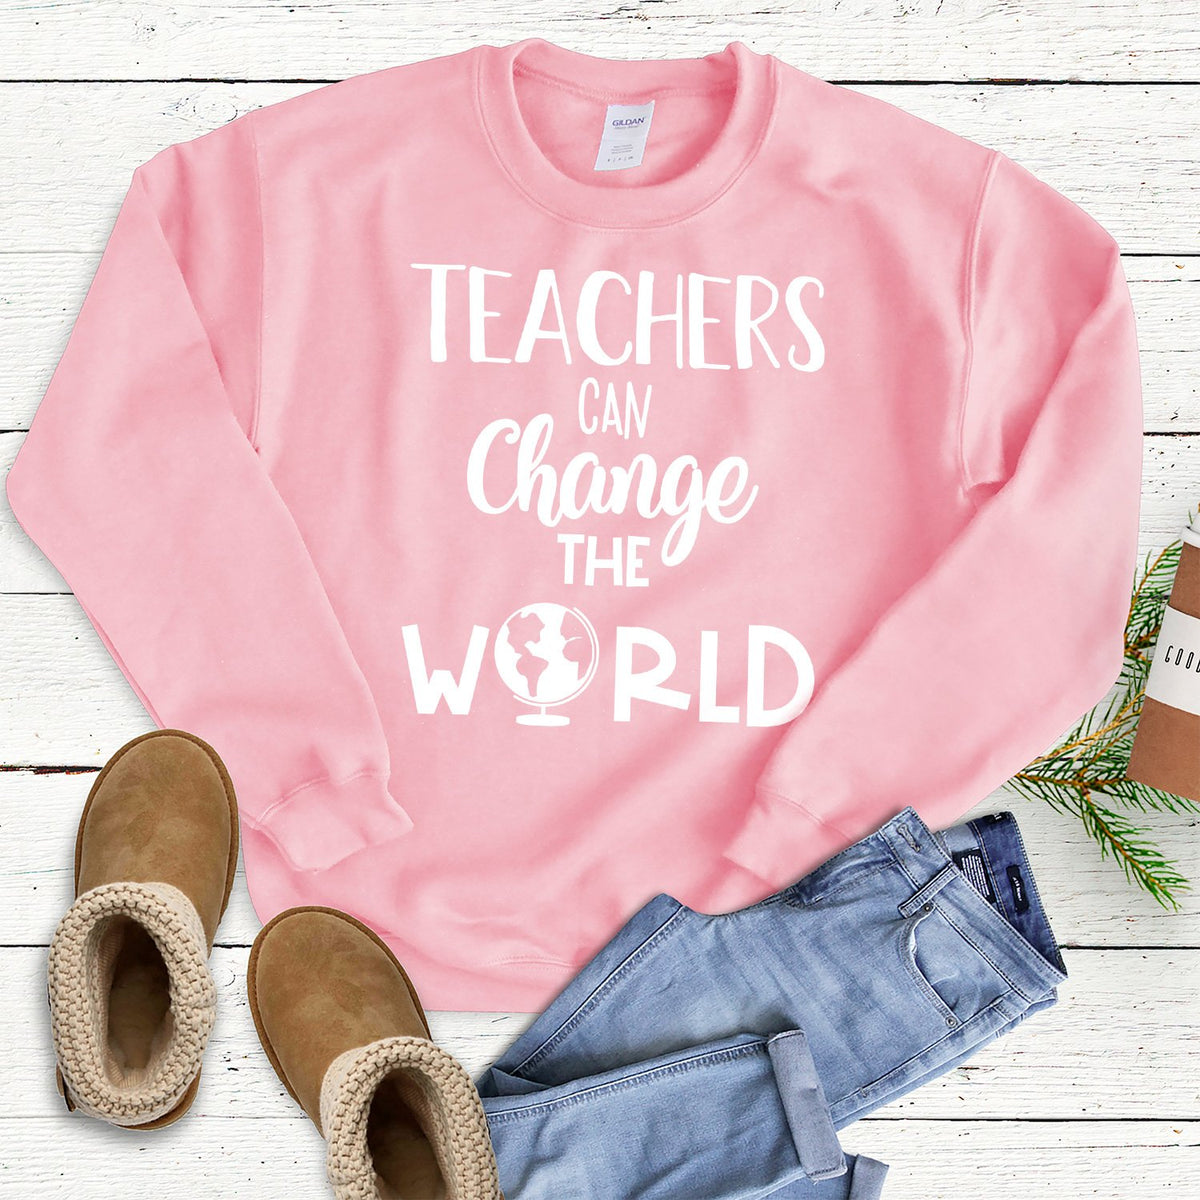 Teachers Can Change the World - Long Sleeve Heavy Crewneck Sweatshirt